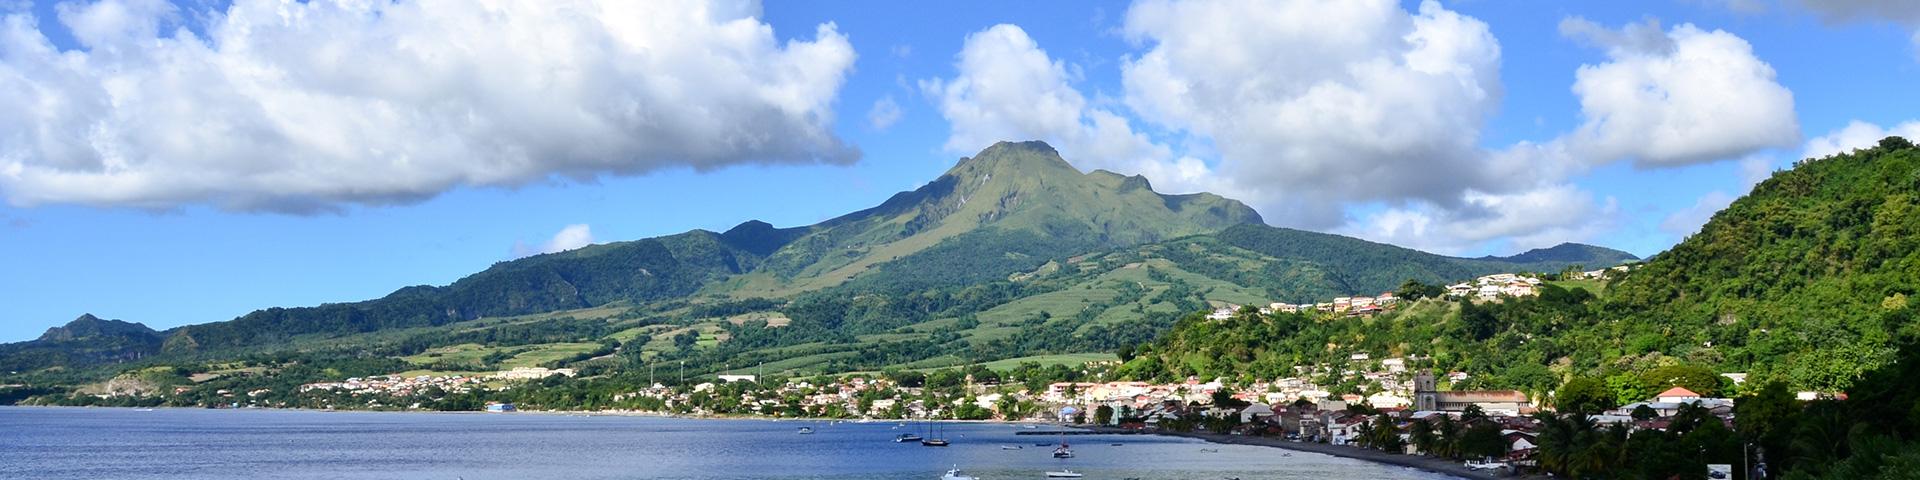 The Bay of Saint Pierre, Martinique